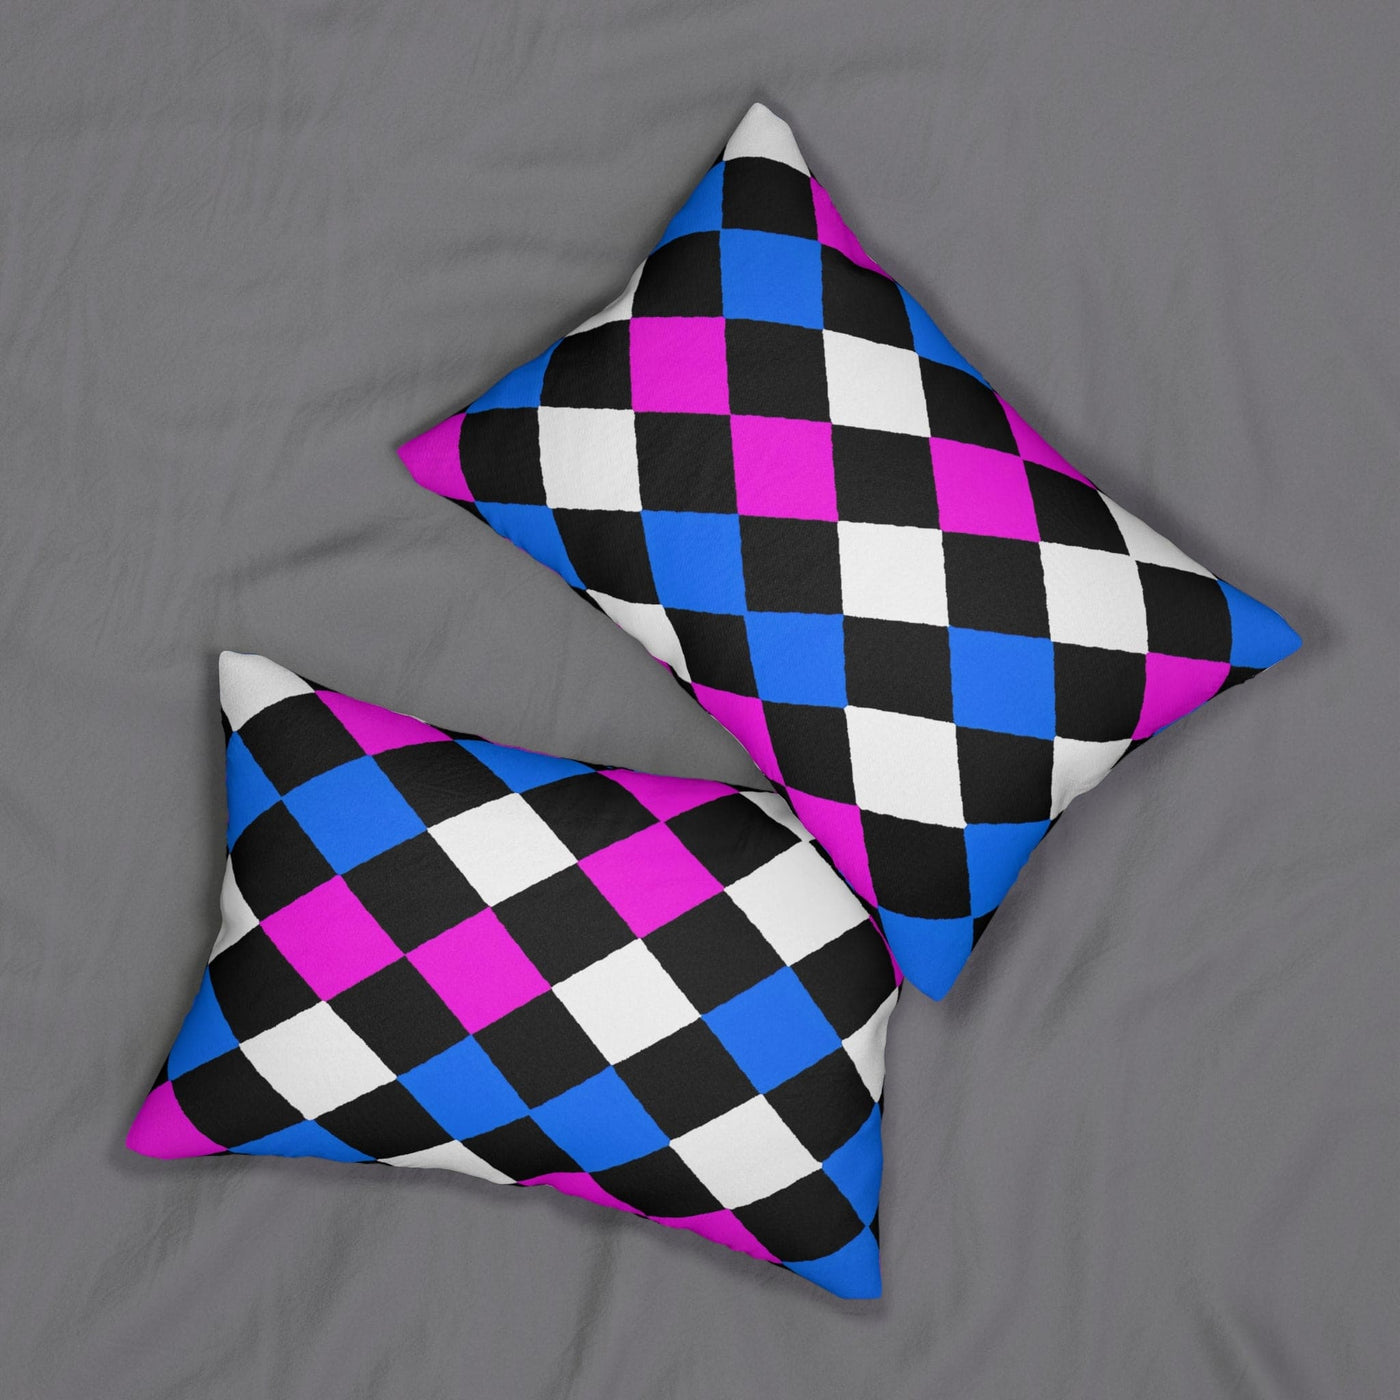 Decorative Lumbar Throw Pillow - Black Pink Blue Checkered Pattern - Decorative